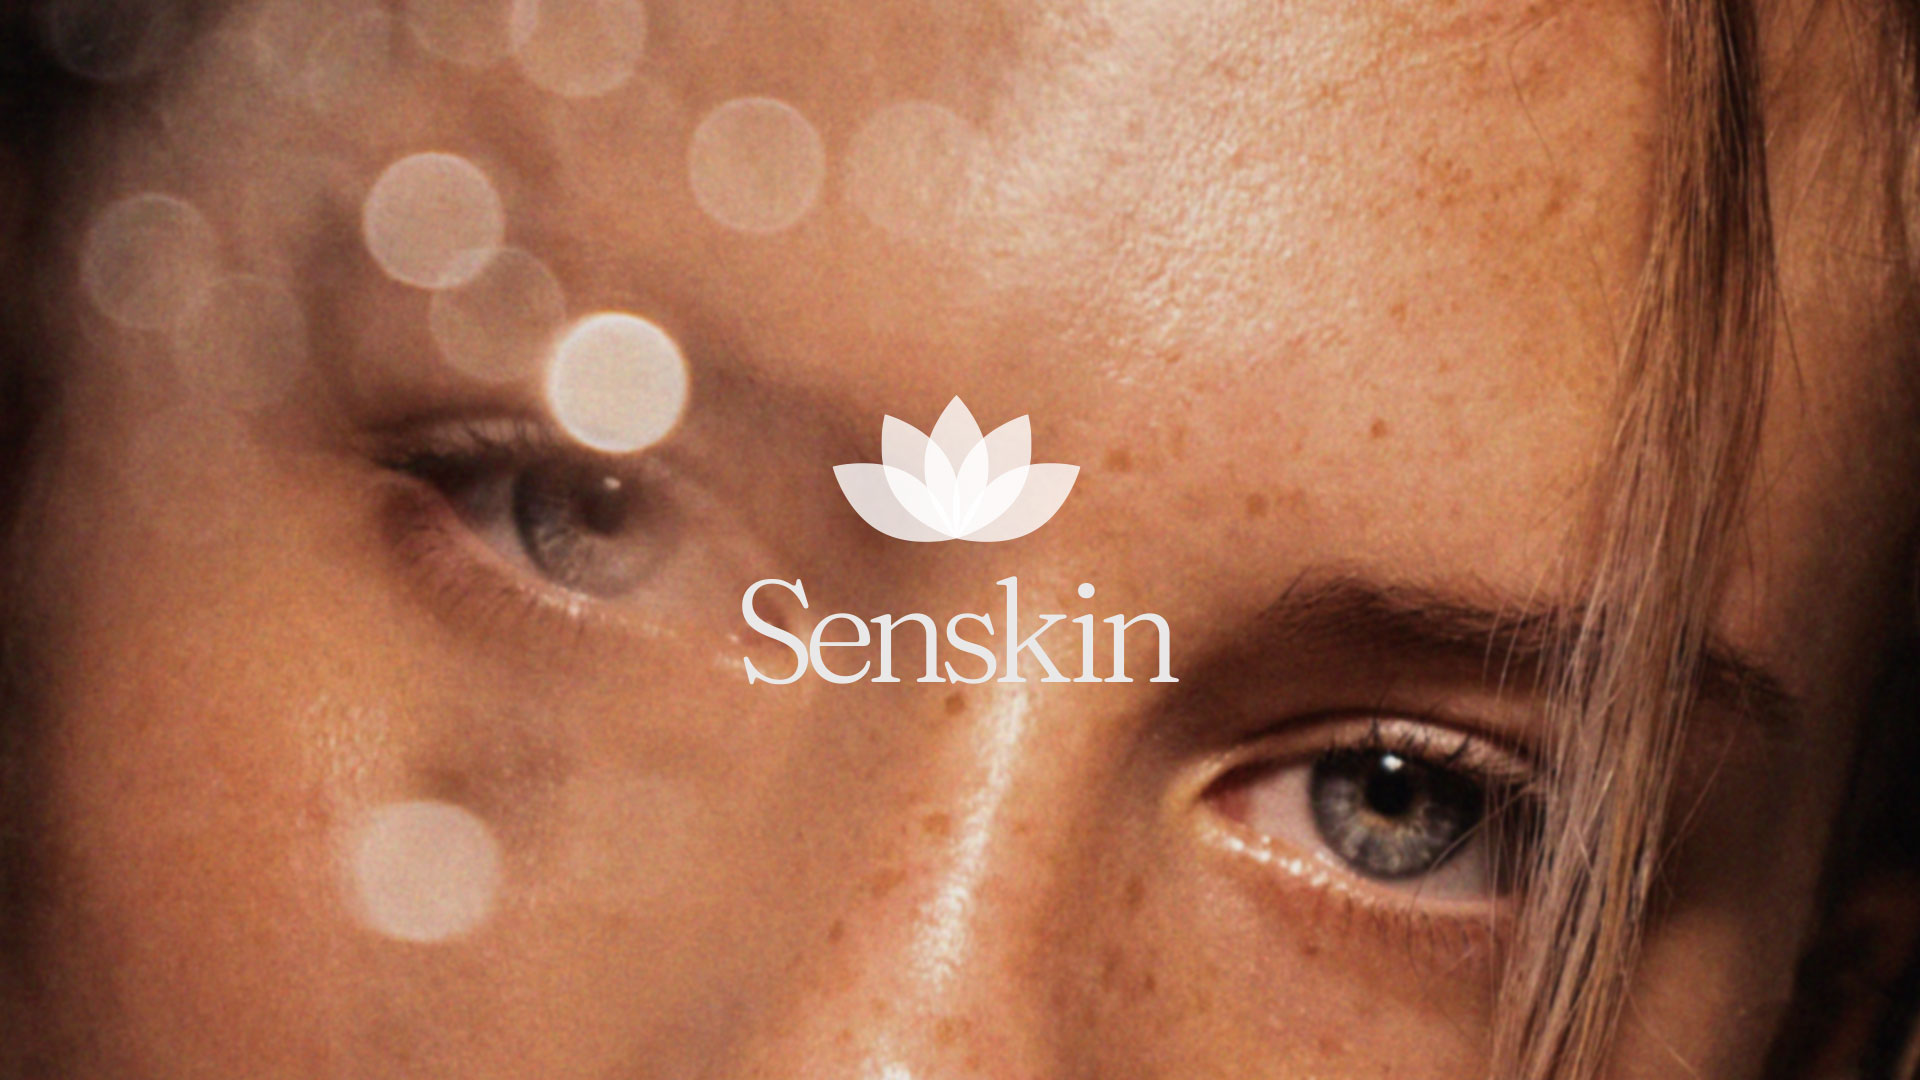 Senskin logo superimposed on model's face.